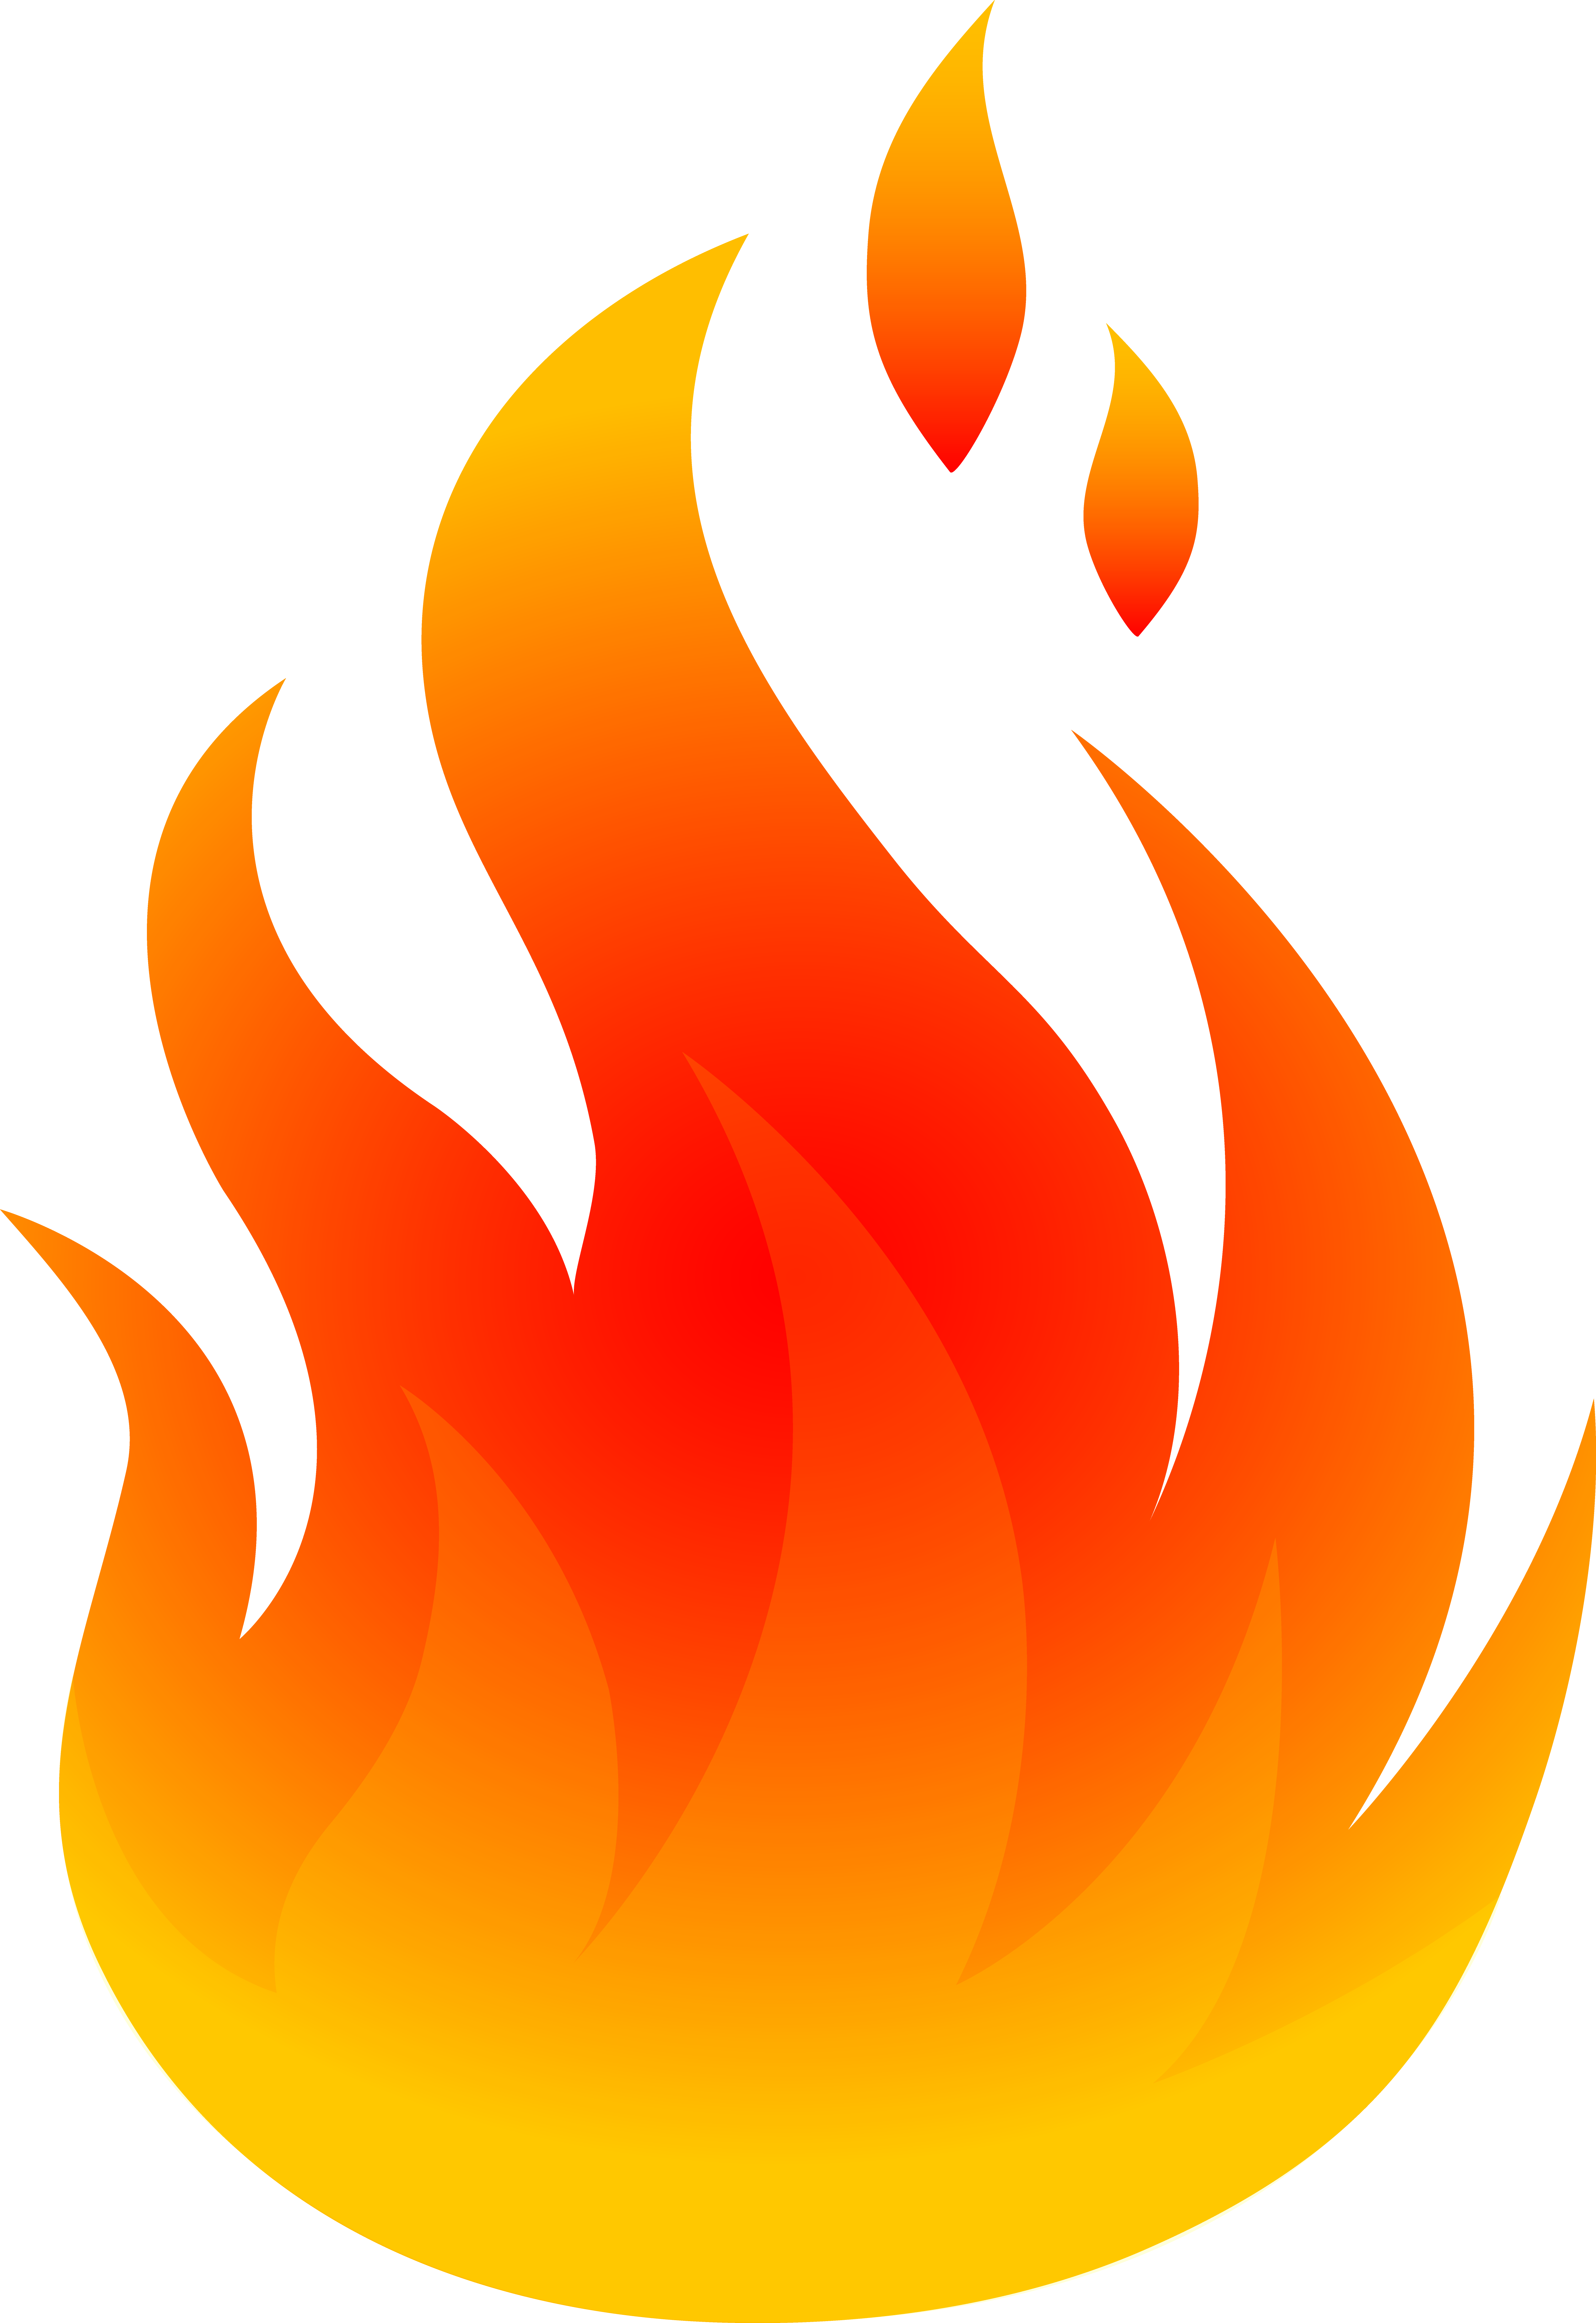 File:Amazon Fire TV logo (New).png - Wikipedia